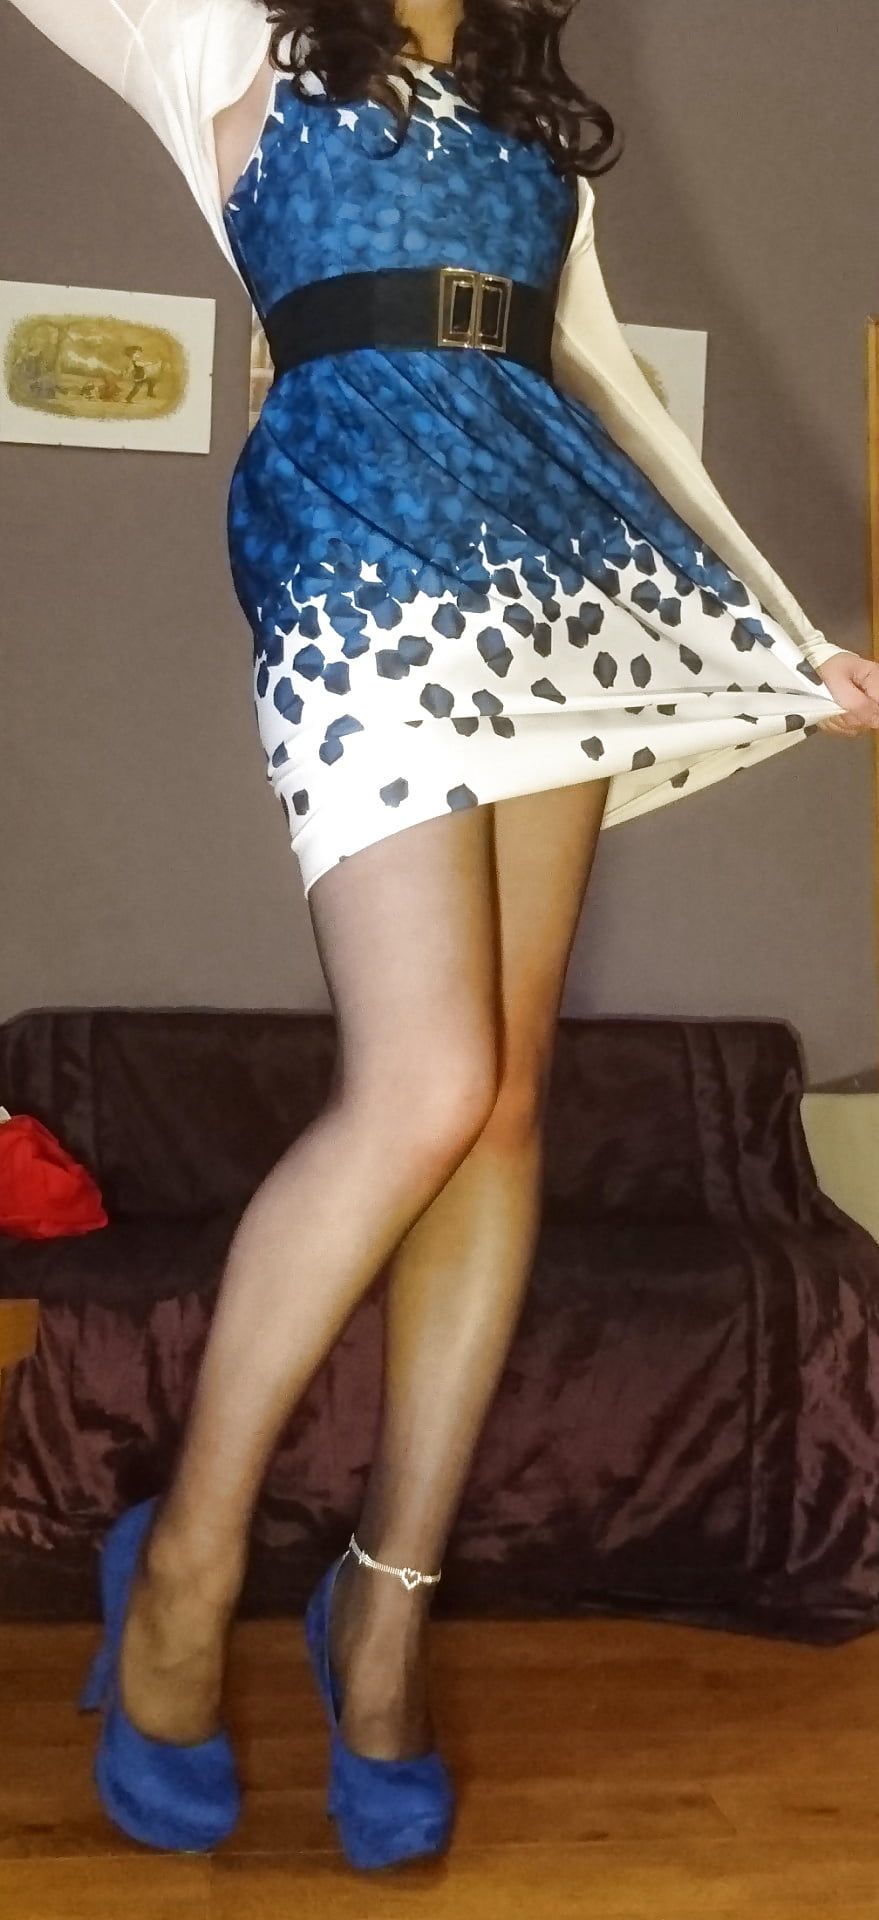 Marie crossdresser blue dress and sheer pantyhose #4